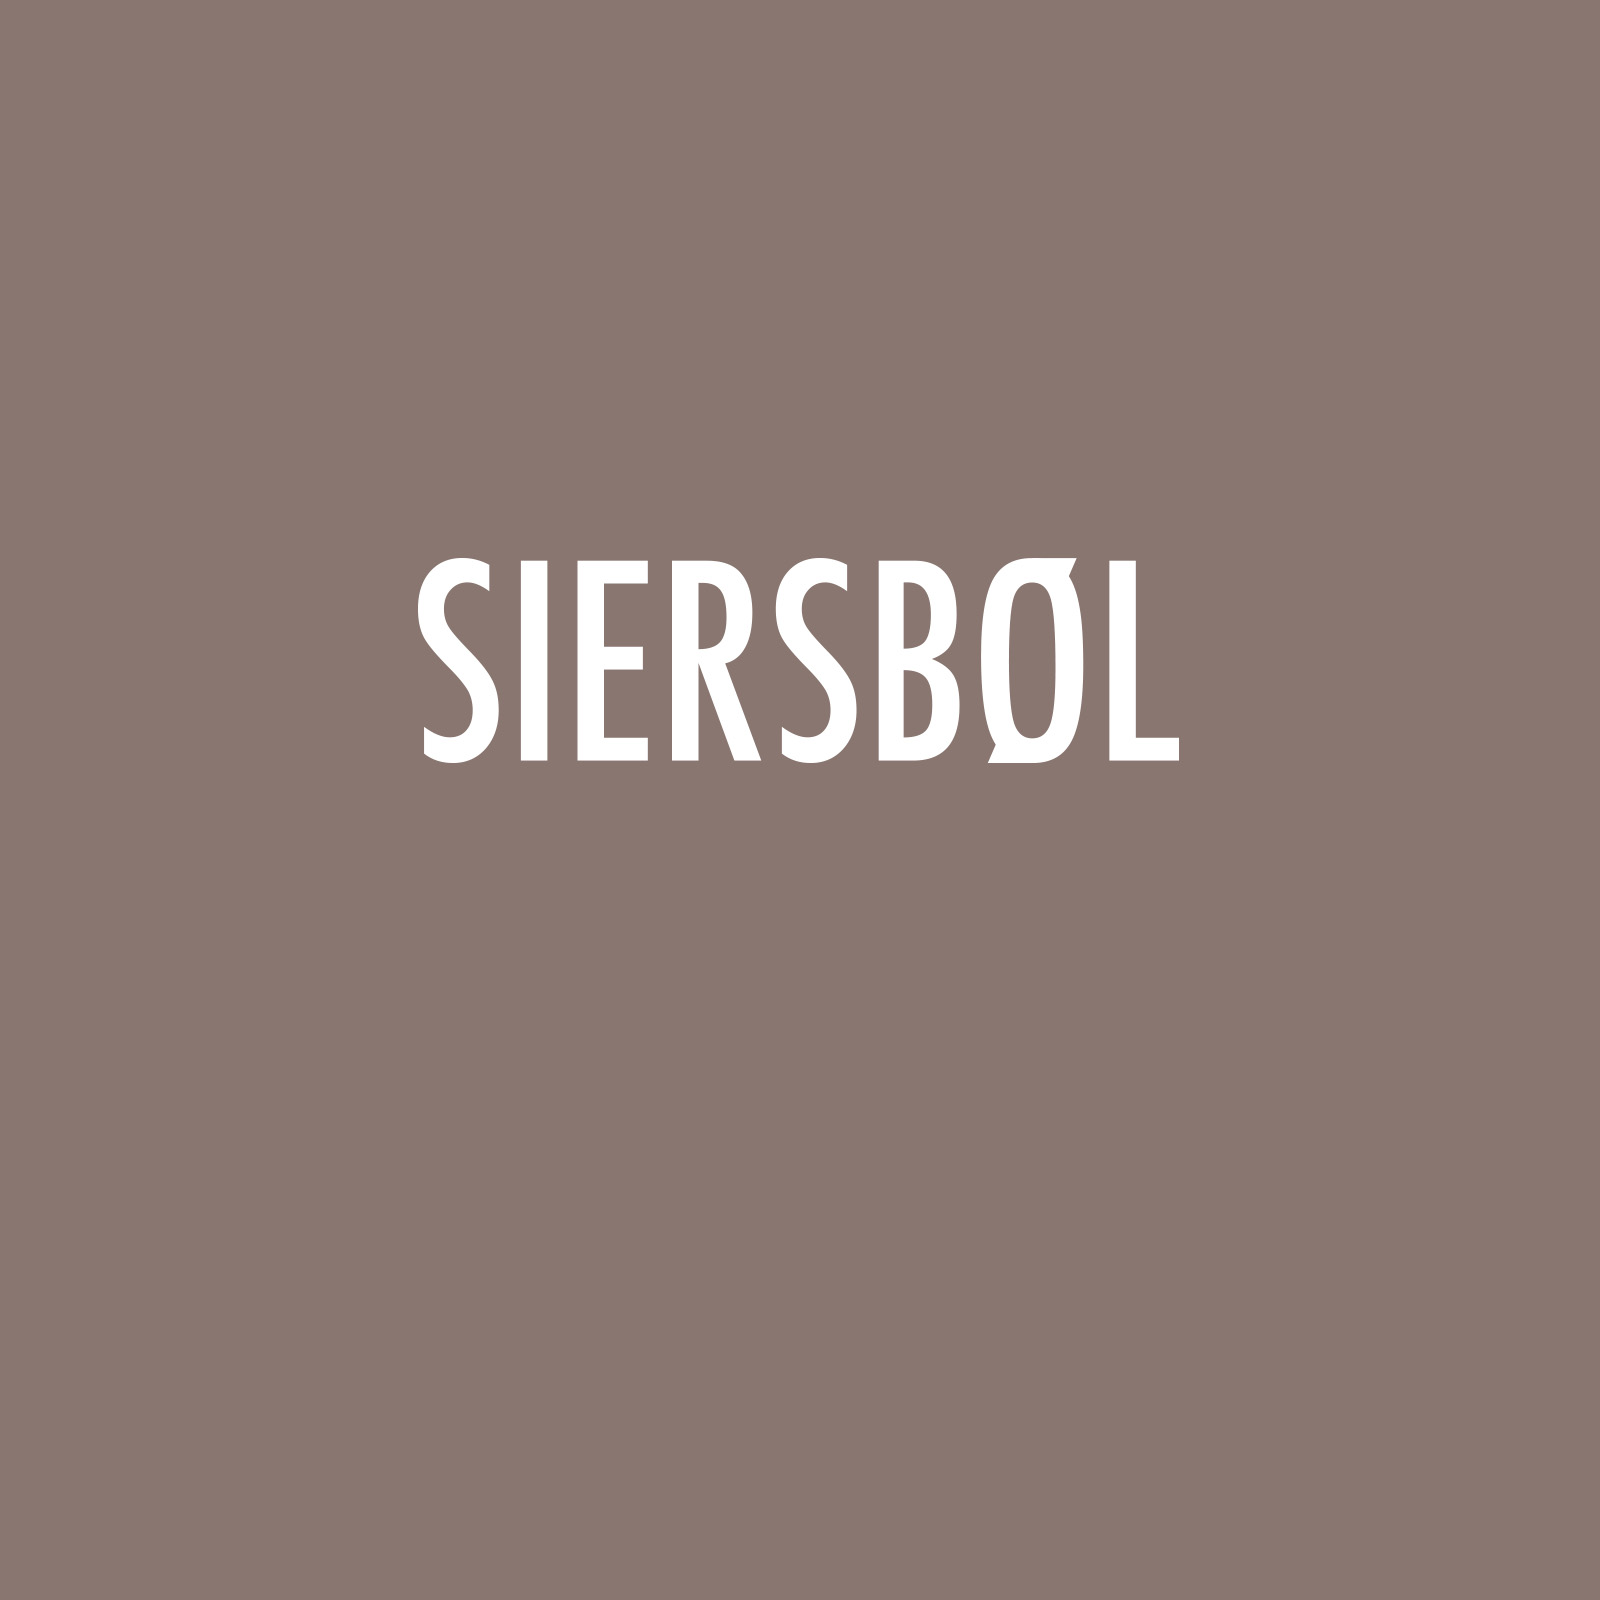 Siersbøl logo